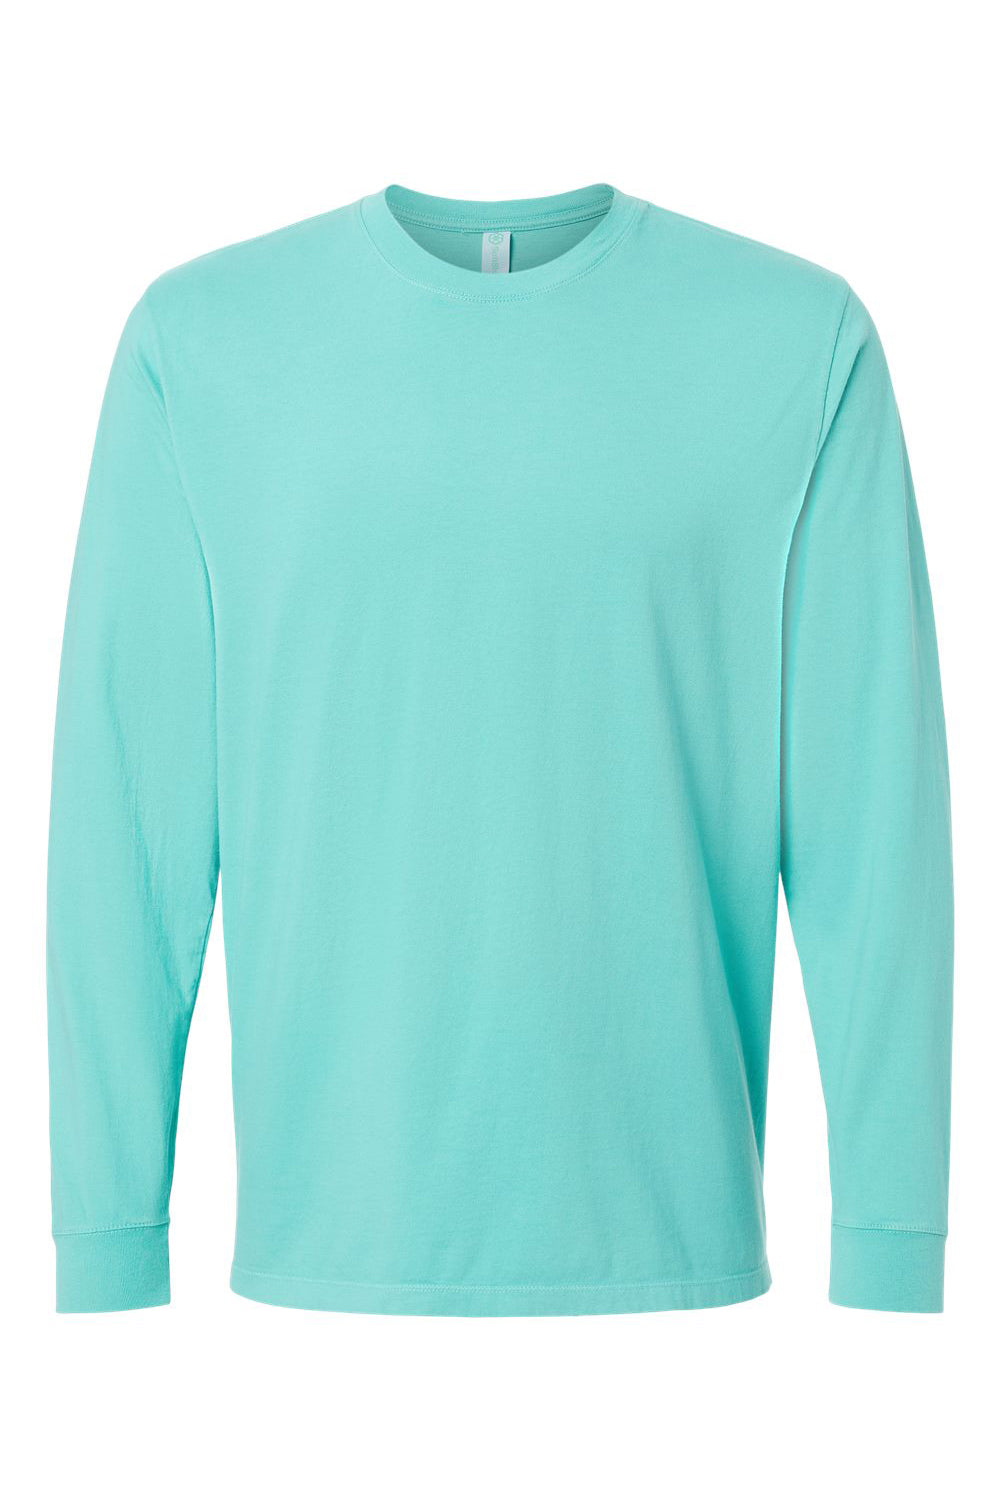 SoftShirts 420 Mens Organic Long Sleeve Crewneck T-Shirt Seaform Green Flat Front